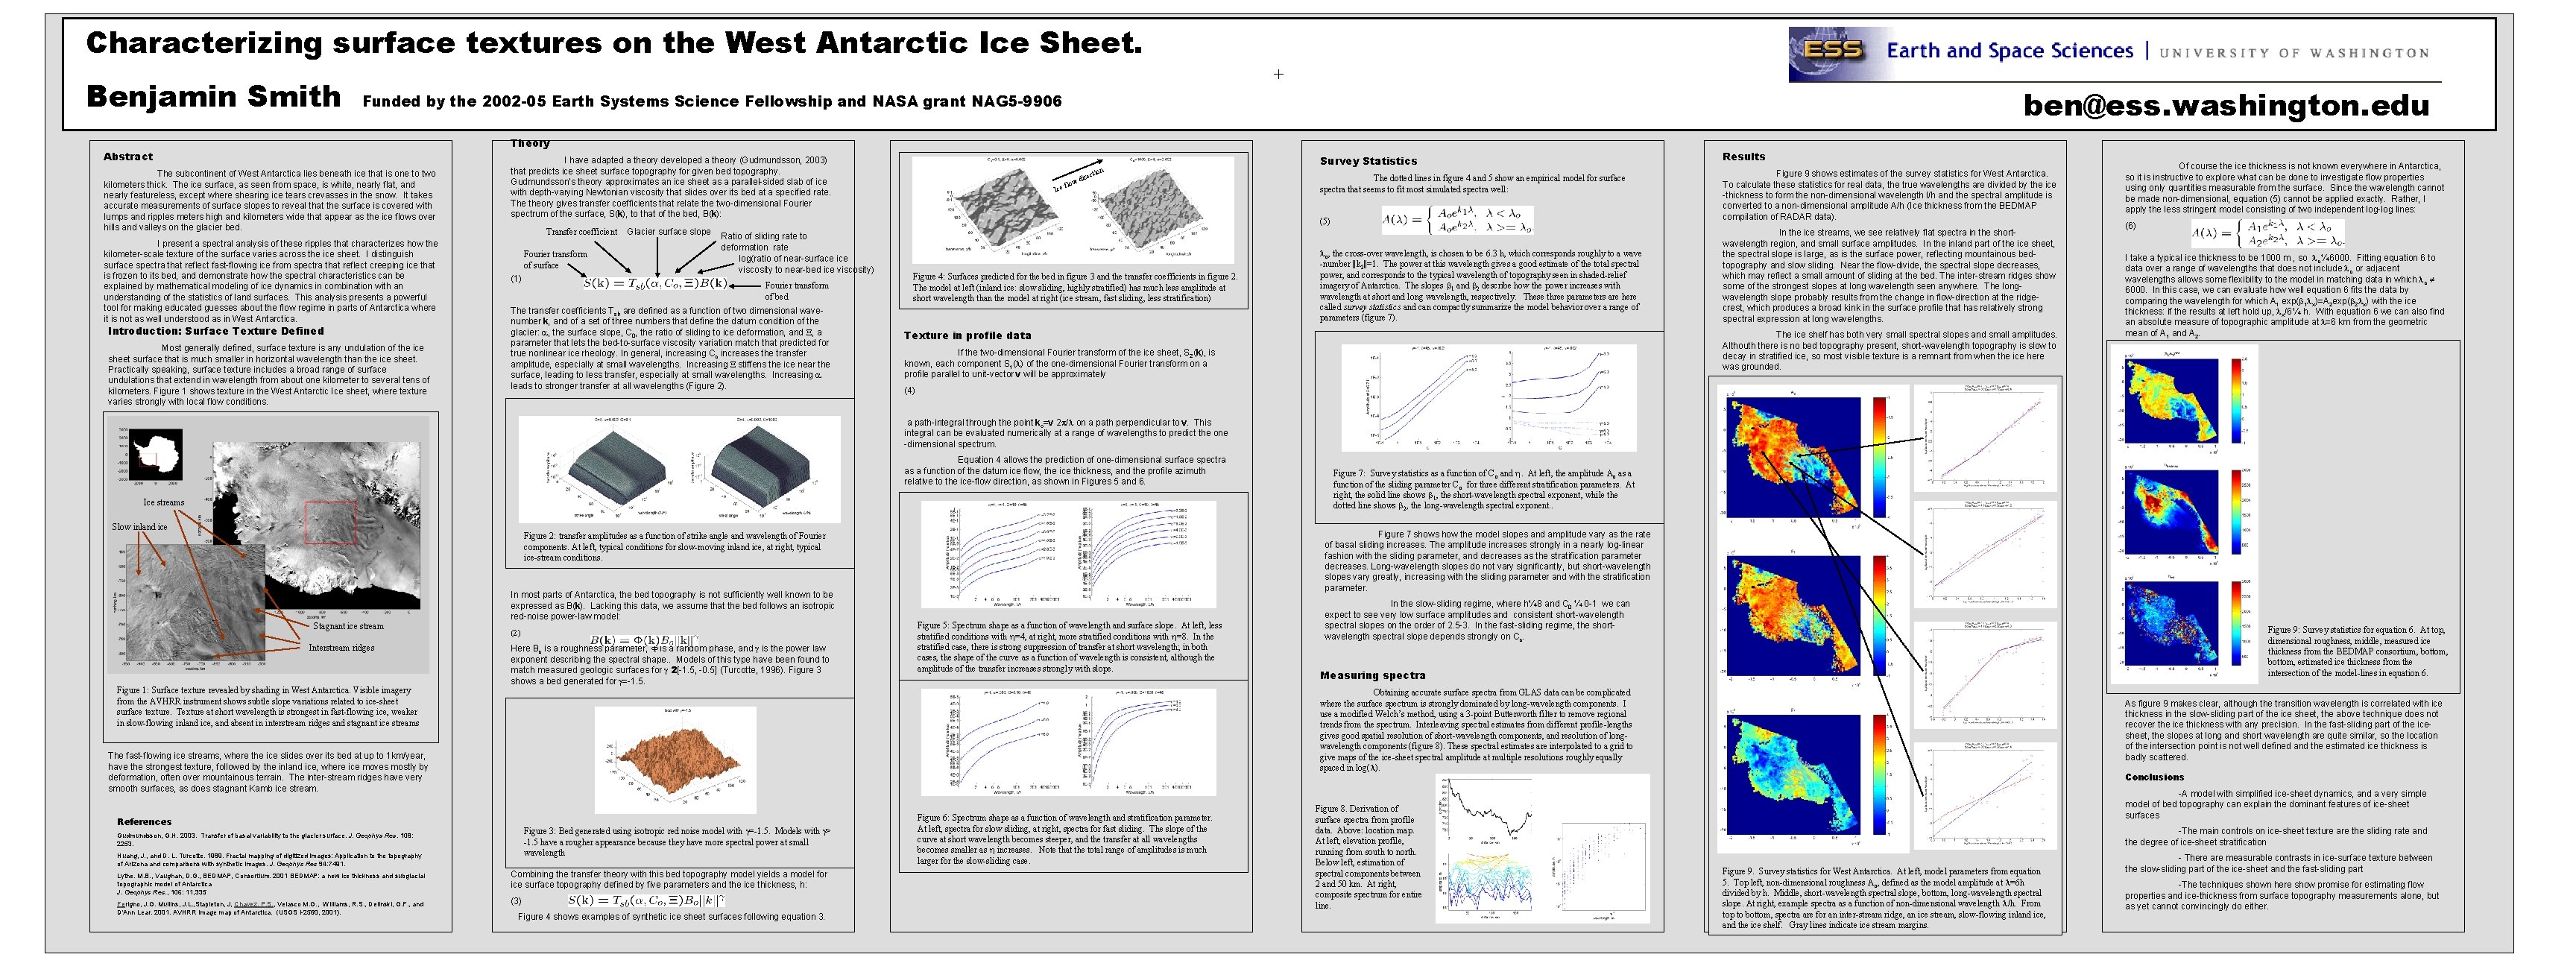 Characterizing surface textures on the West Antarctic Ice Sheet. Benjamin Smith + ben@ess. washington.